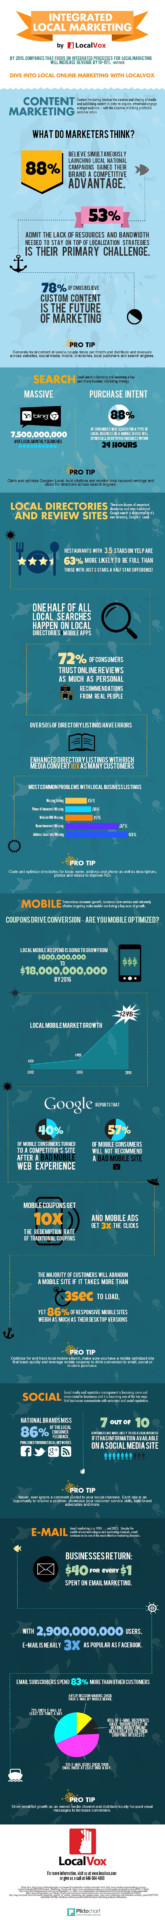 Social Media Marketing + Local Businesses